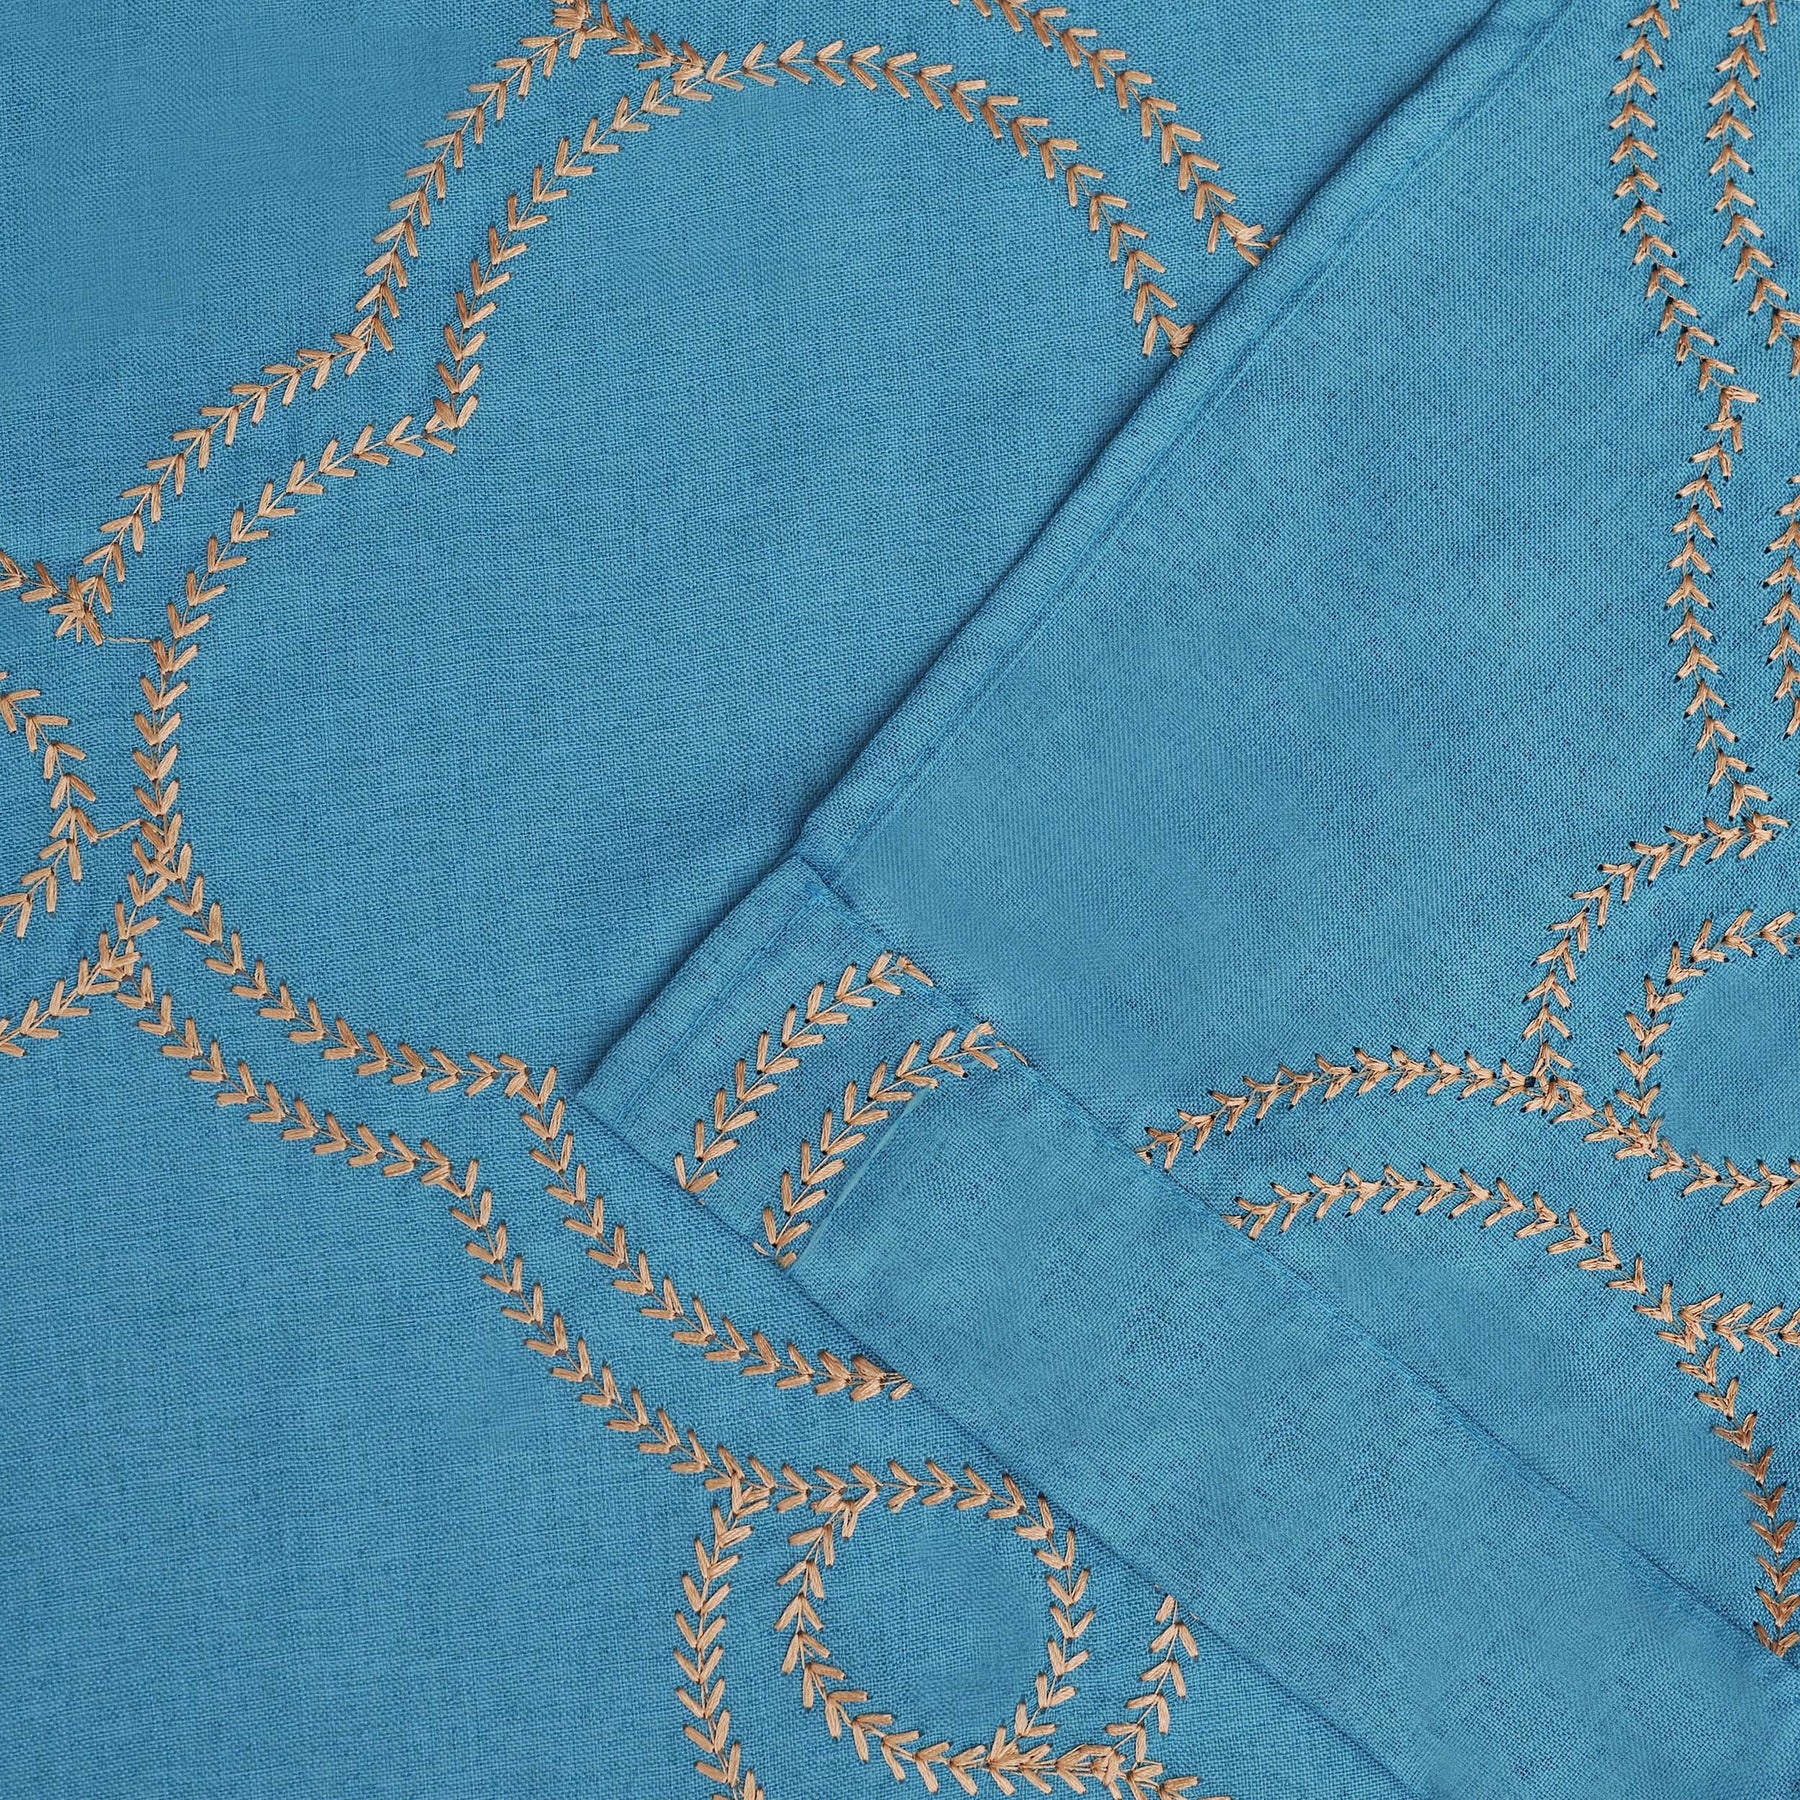 Embroidered Moroccan Sheer Grommet Curtain Panel Set - Aquarius